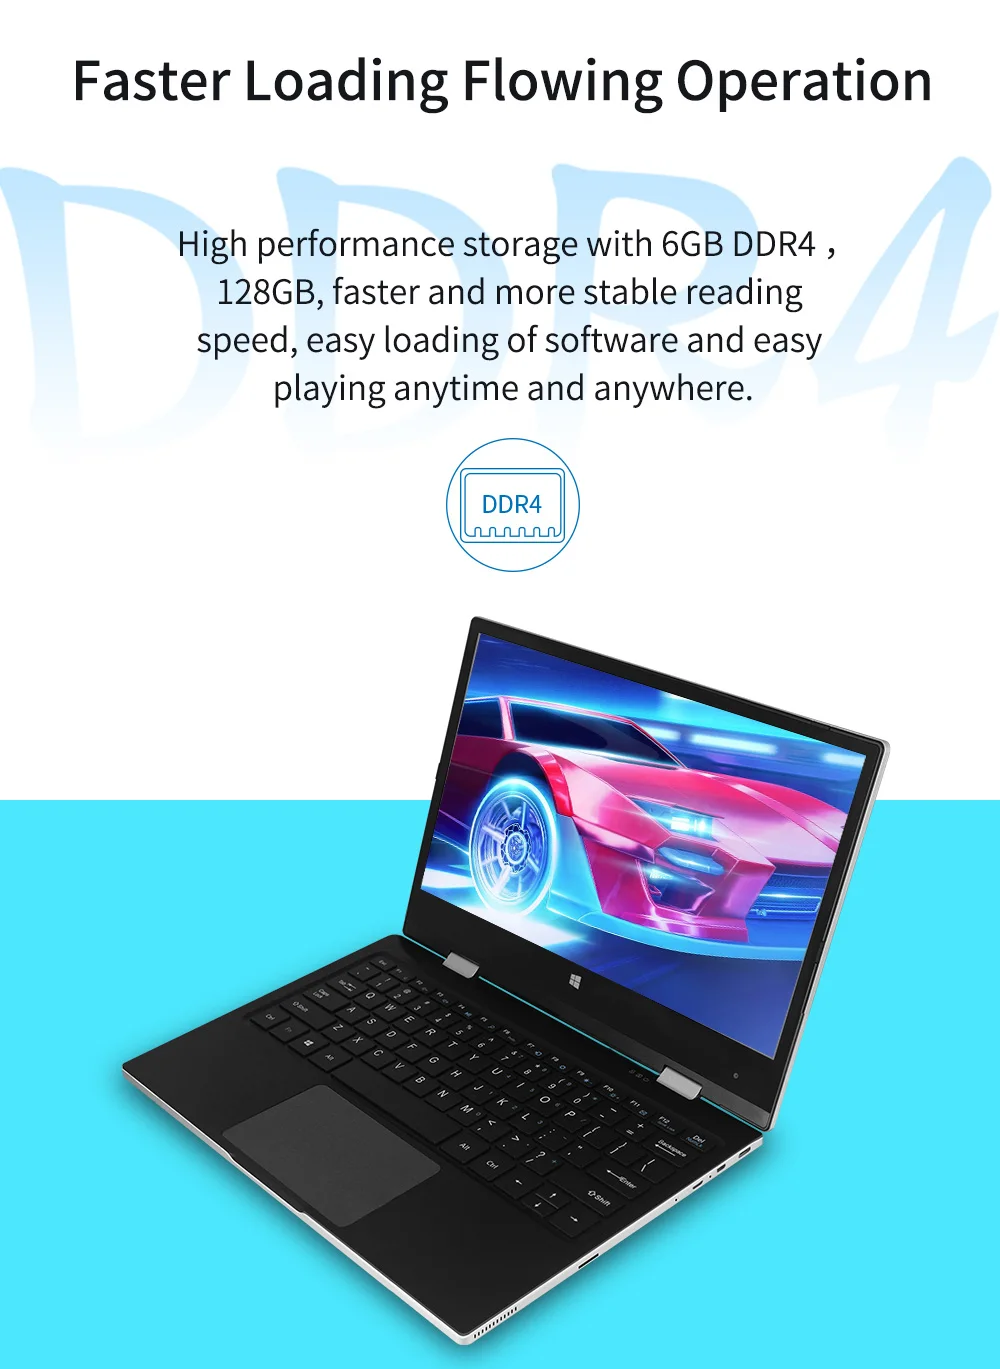 Jumper EZbook X1 Notebook 6GB 128GB 11.6 Inch 1920*1080 FHD IPS Laptop Touch Screen Intel Celeron Quad Core Laptops Windows 10